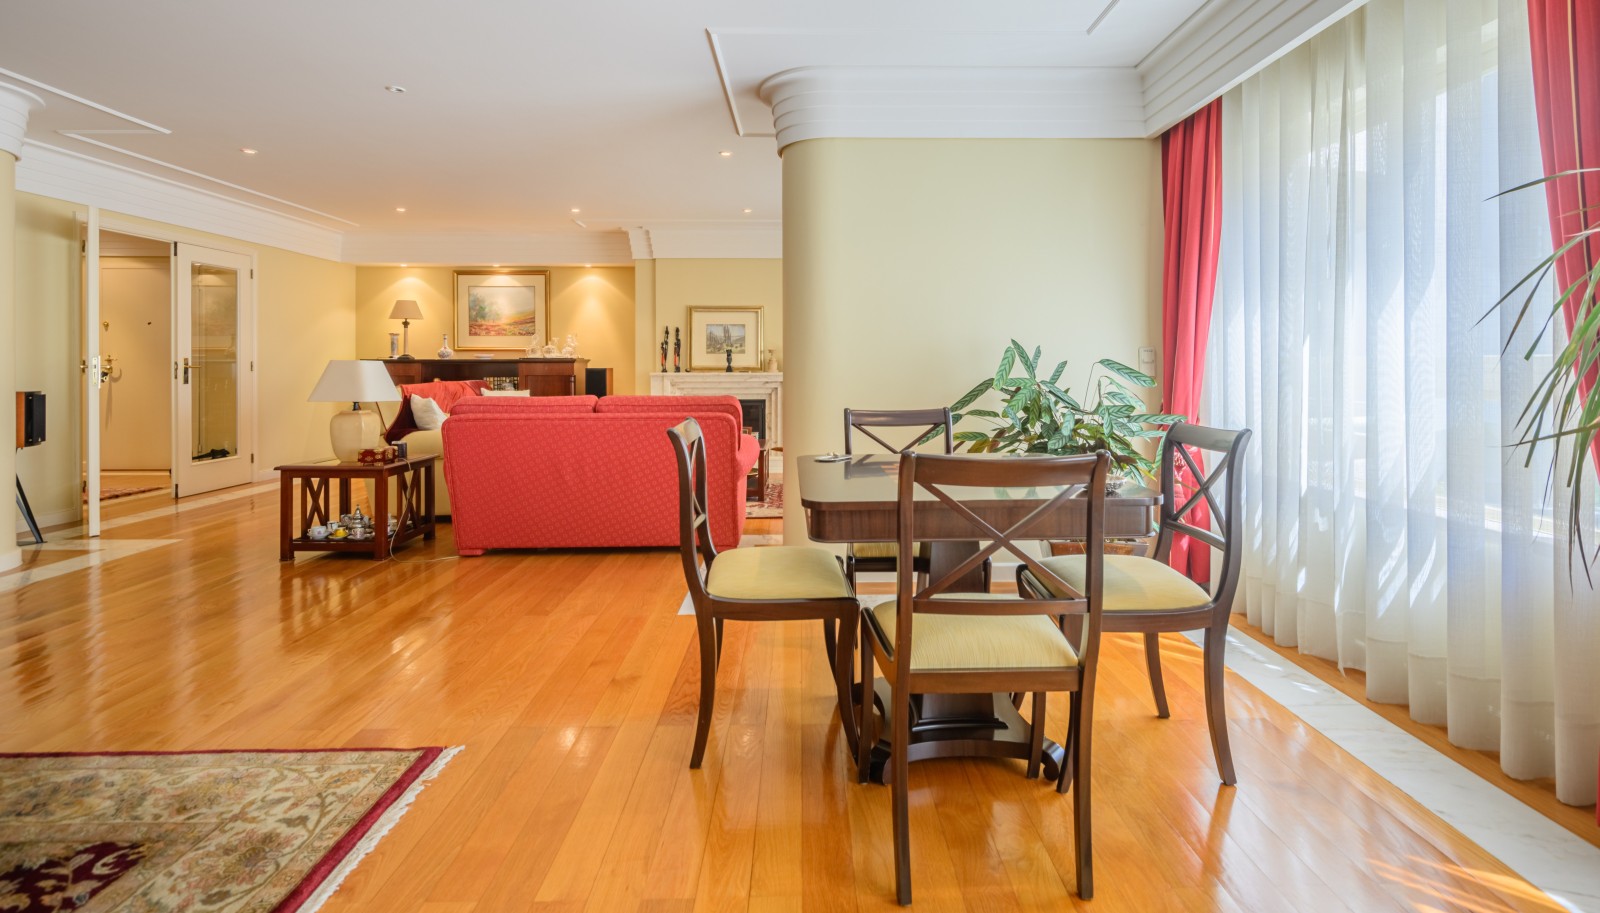 Appartement de 5 chambres avec balcon, à vendre, à V. N. Gaia, Porto, Portugal_236338